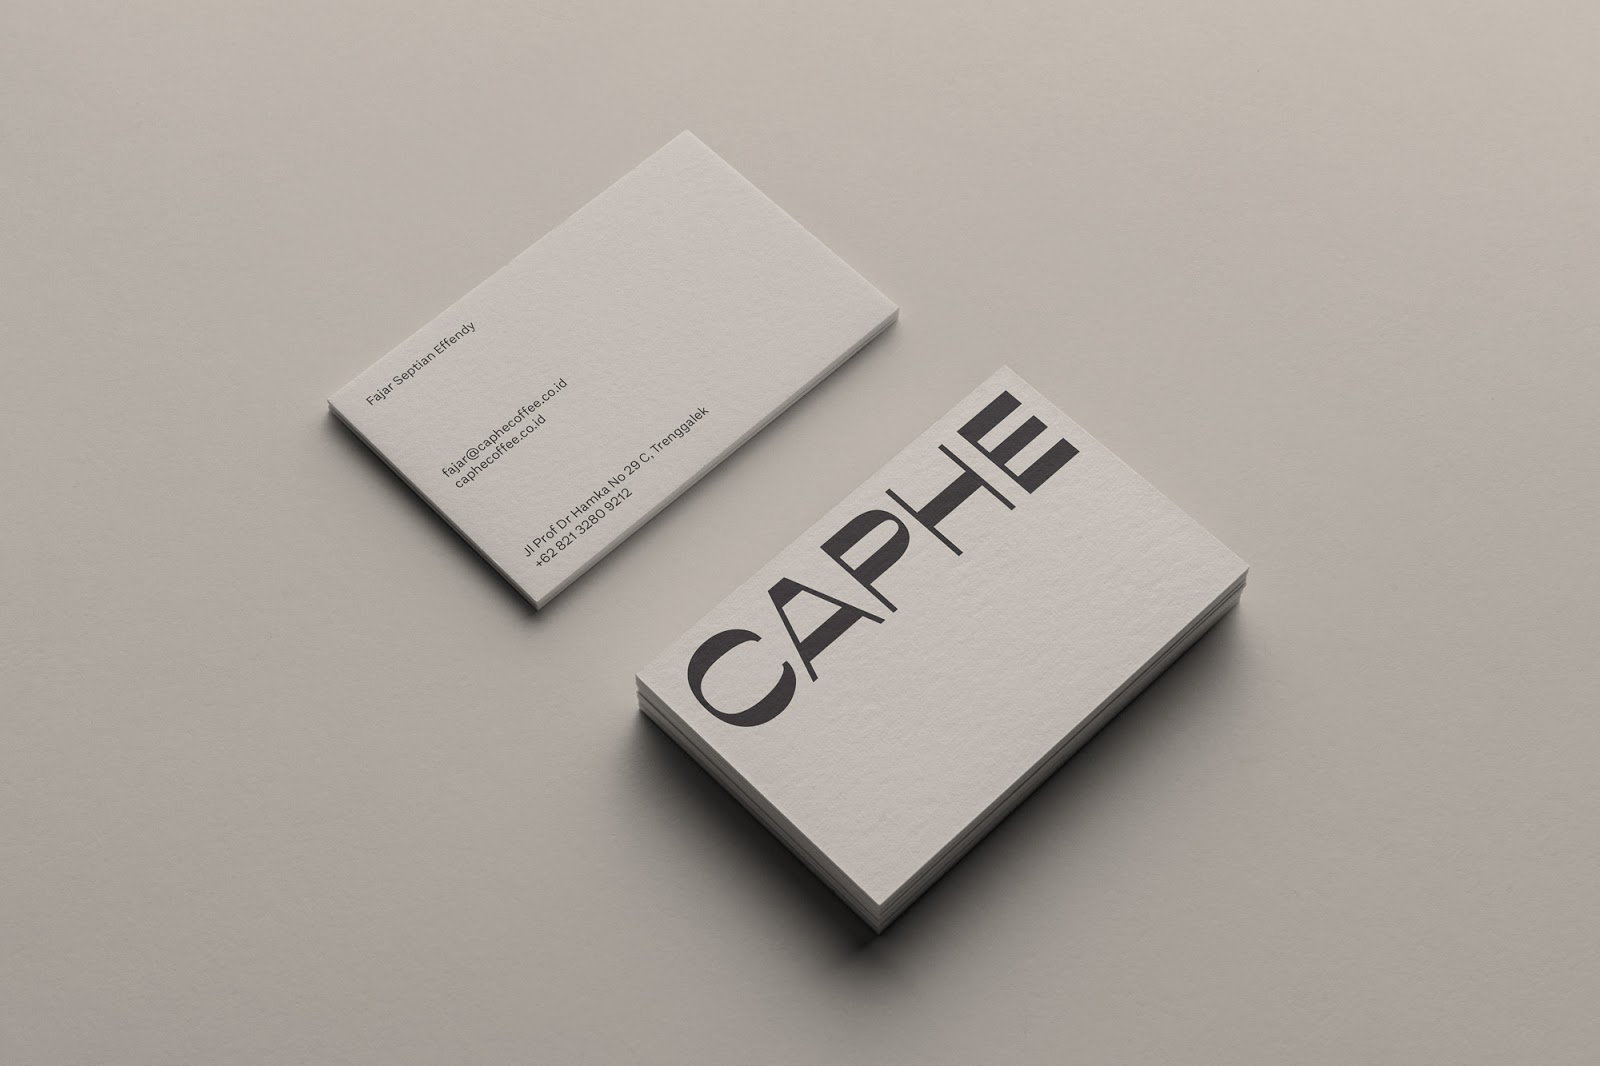 Caphe咖啡包装设计